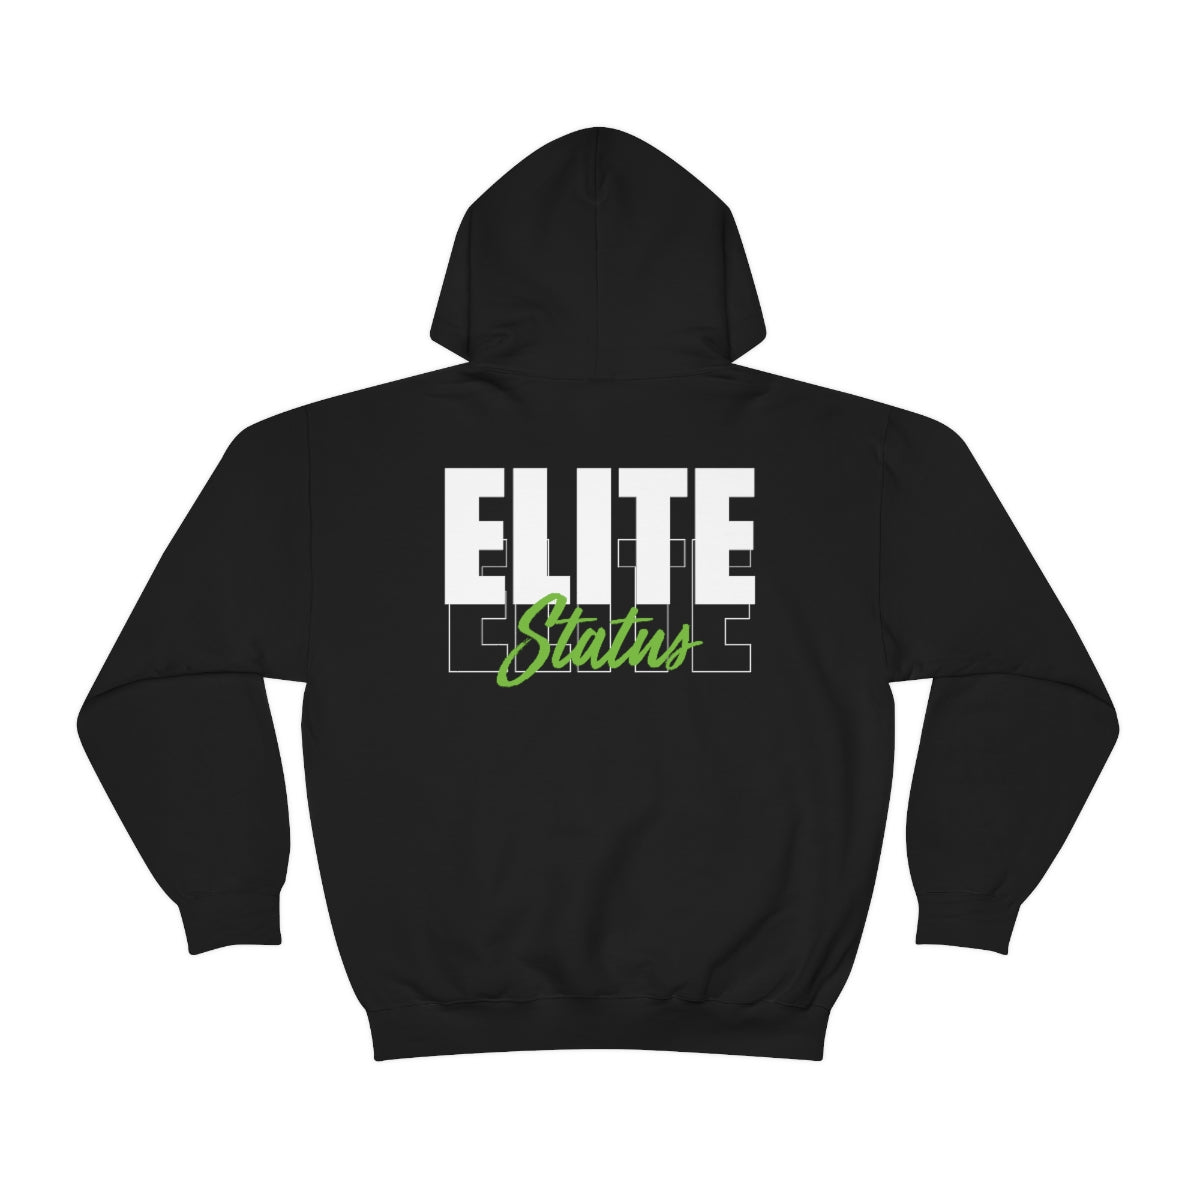 Limited Edition Credit Stacking Elite Status Hooded Sweatshirt